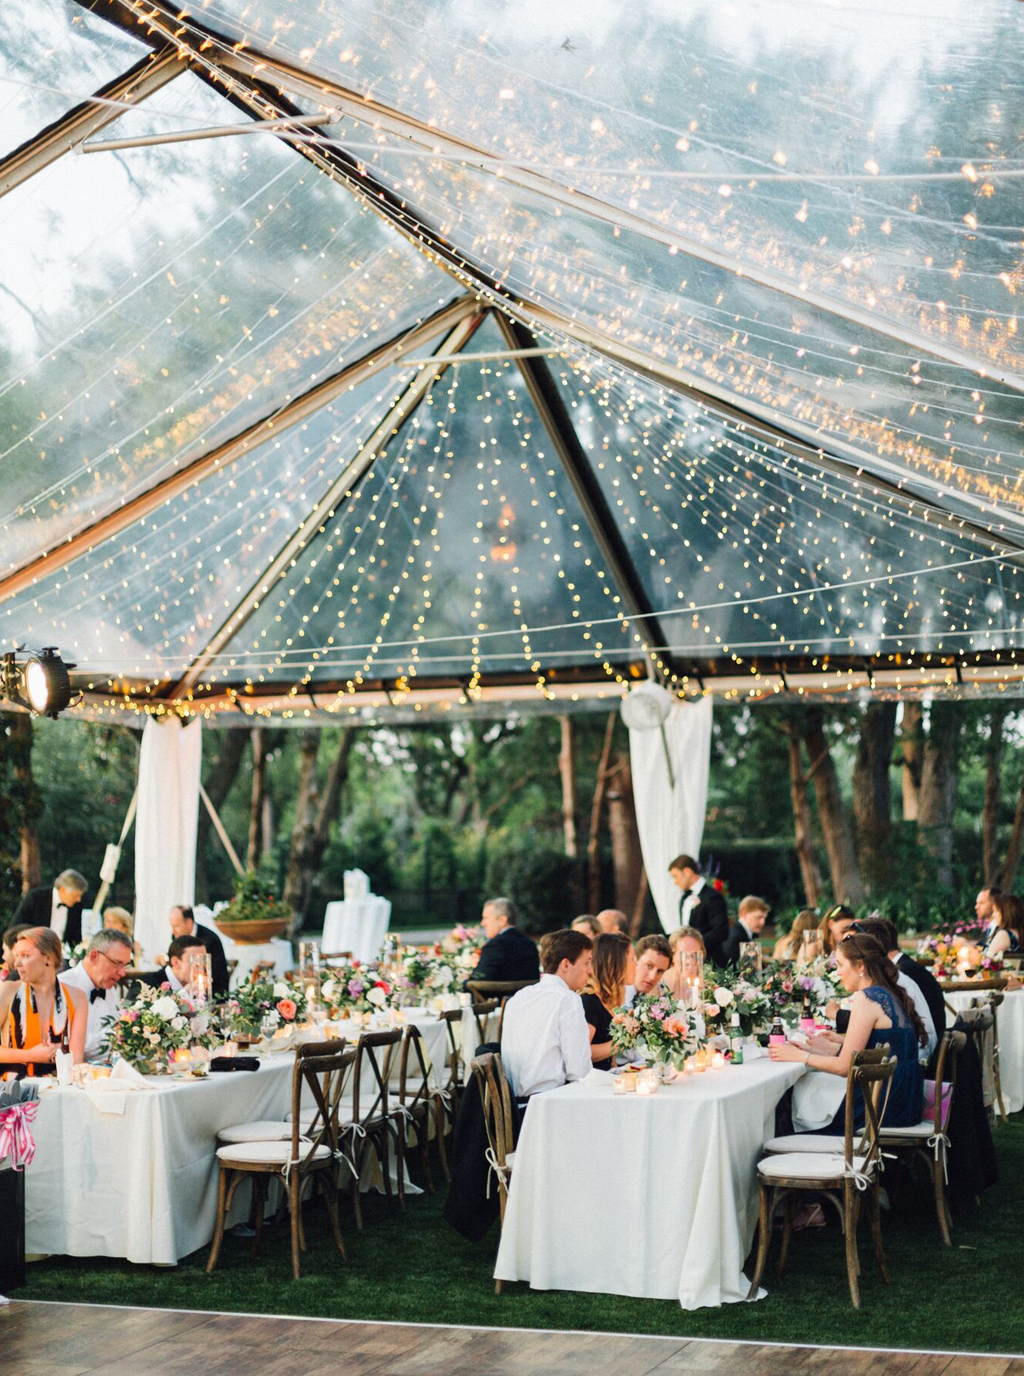 Dallas Arboretum Camp House Tented Wedding Reception